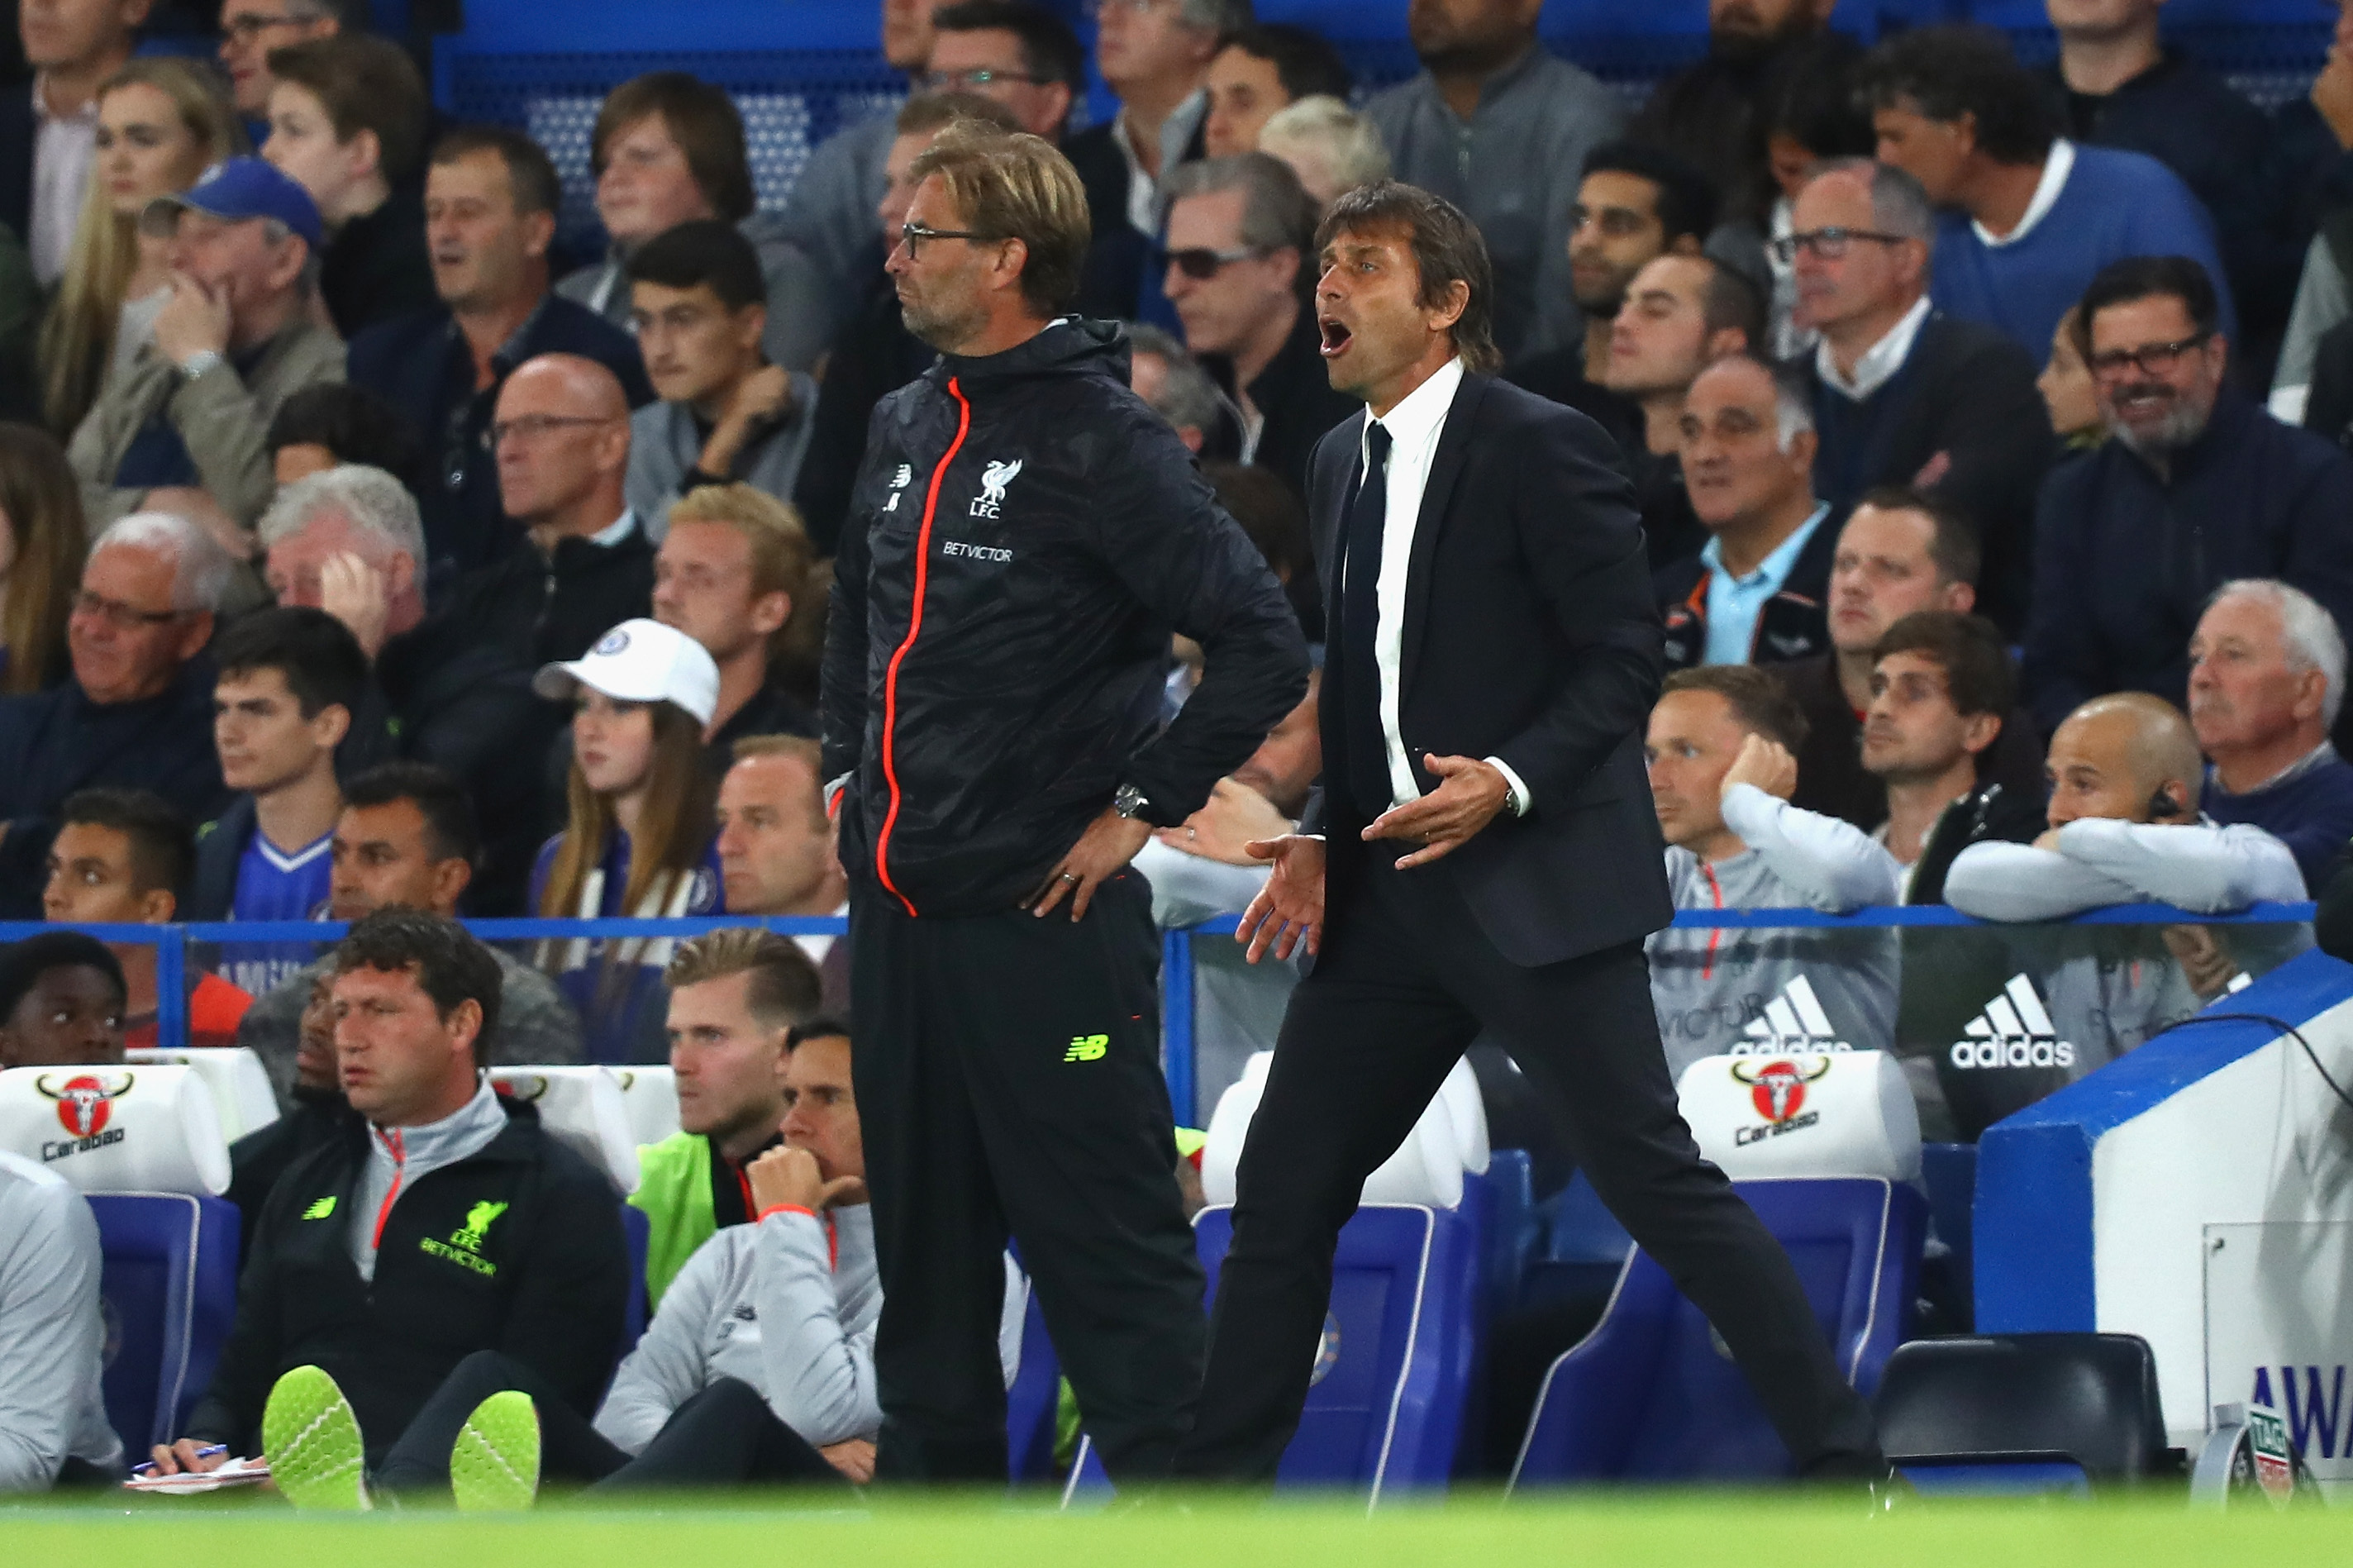 Chelsea boss Antonio Conte moans fixture list gives Liverpool